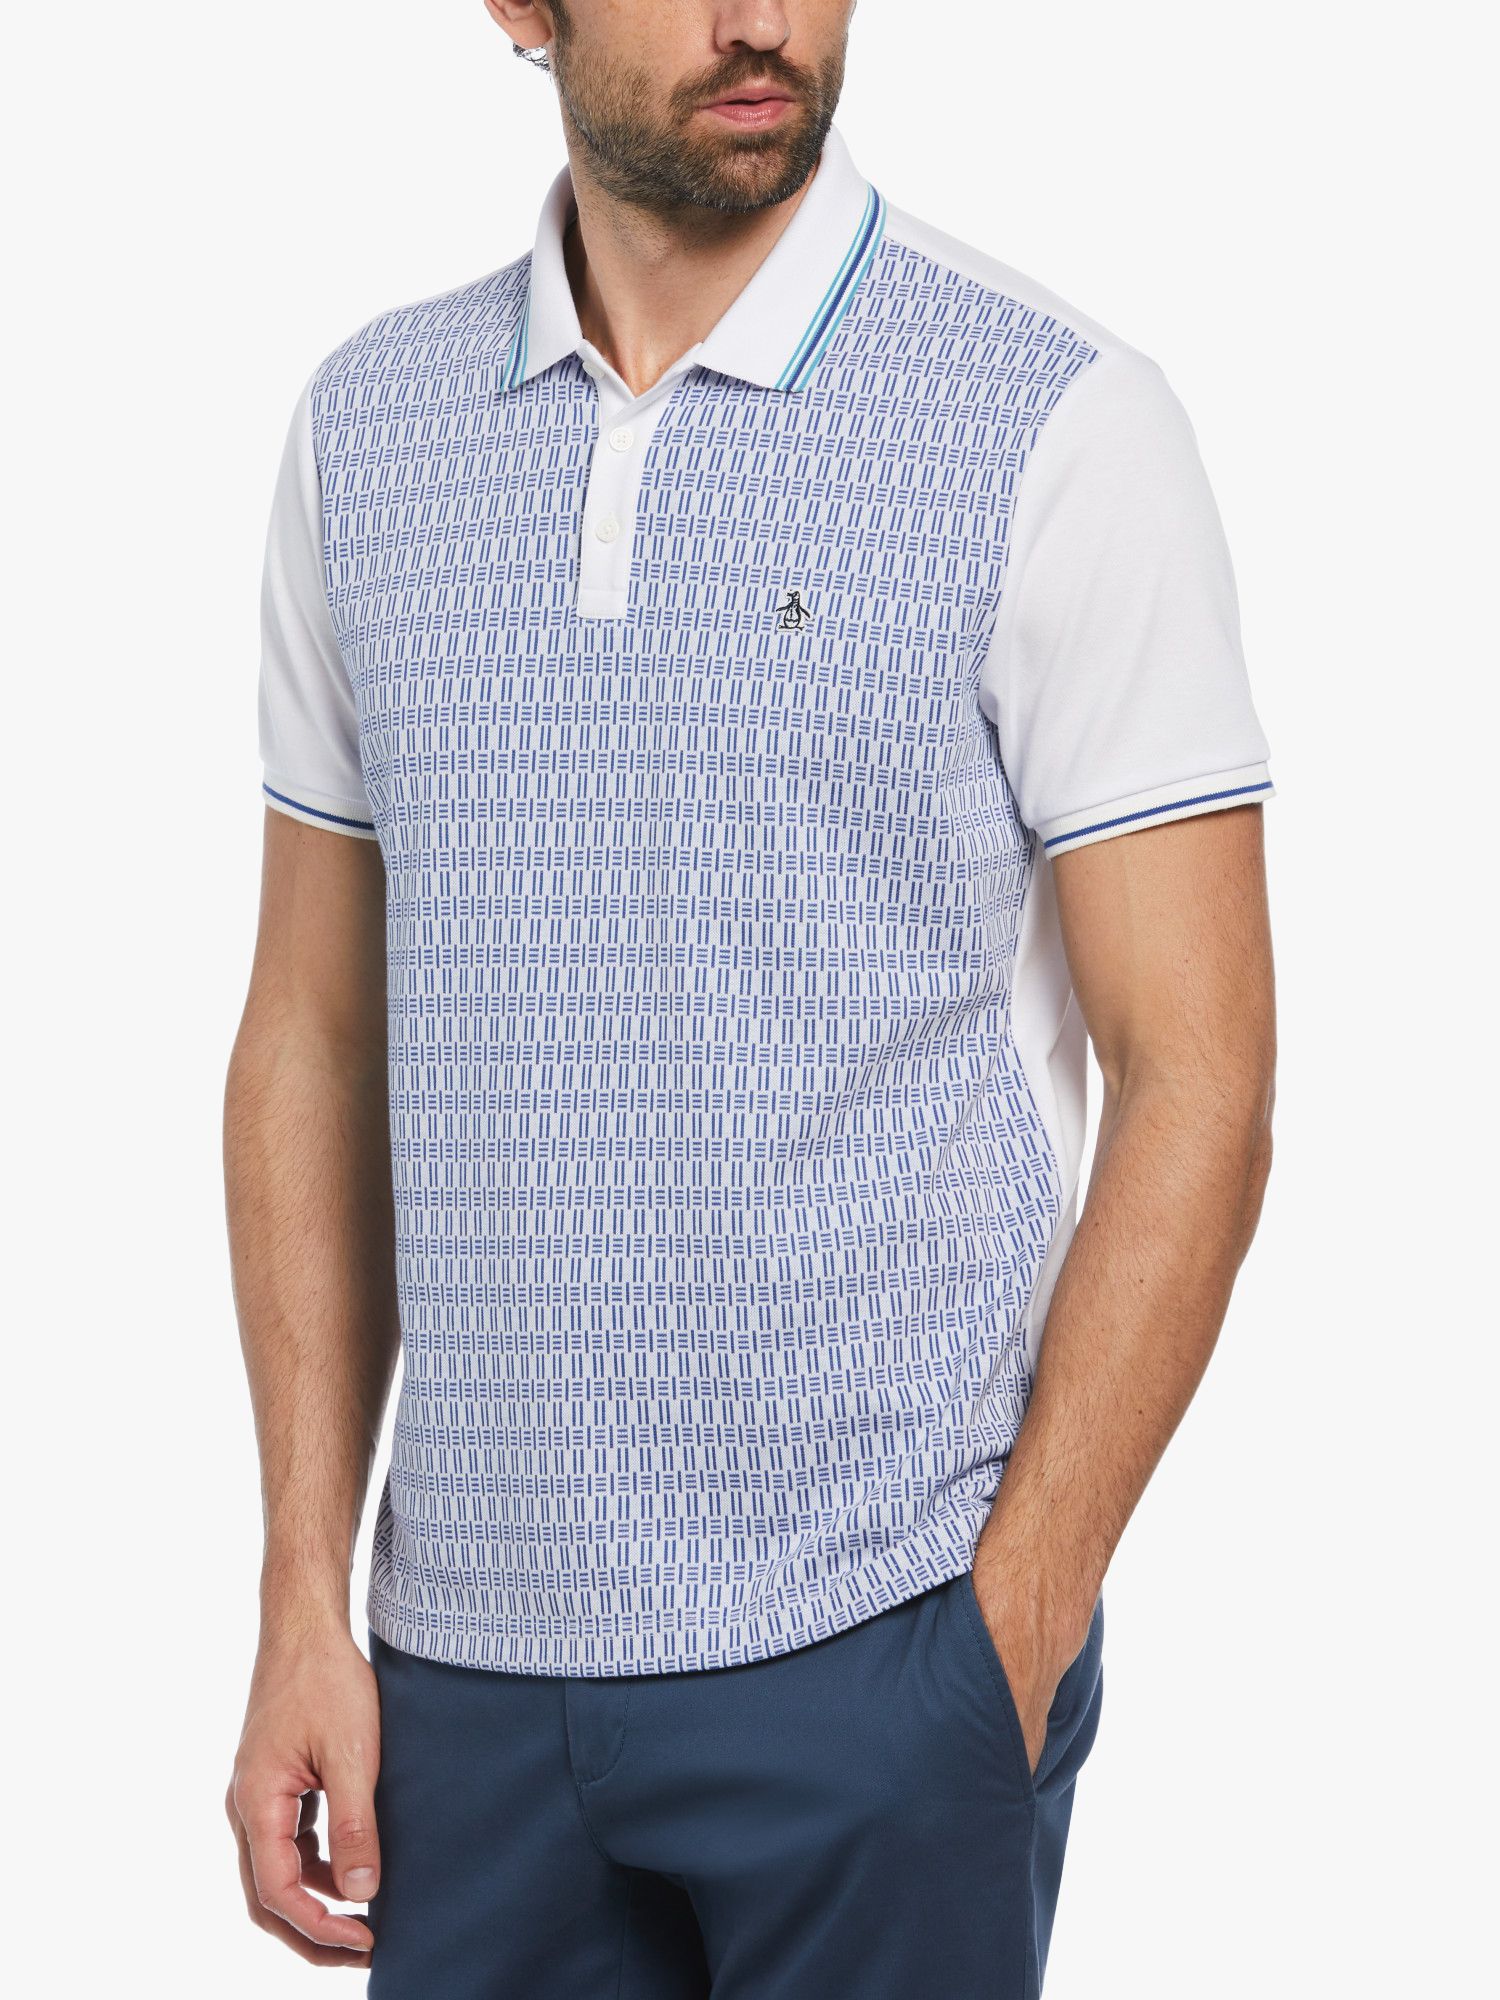 Original Penguin Jacquard Front Interlock Polo Shirt, Bright White/Blue, L